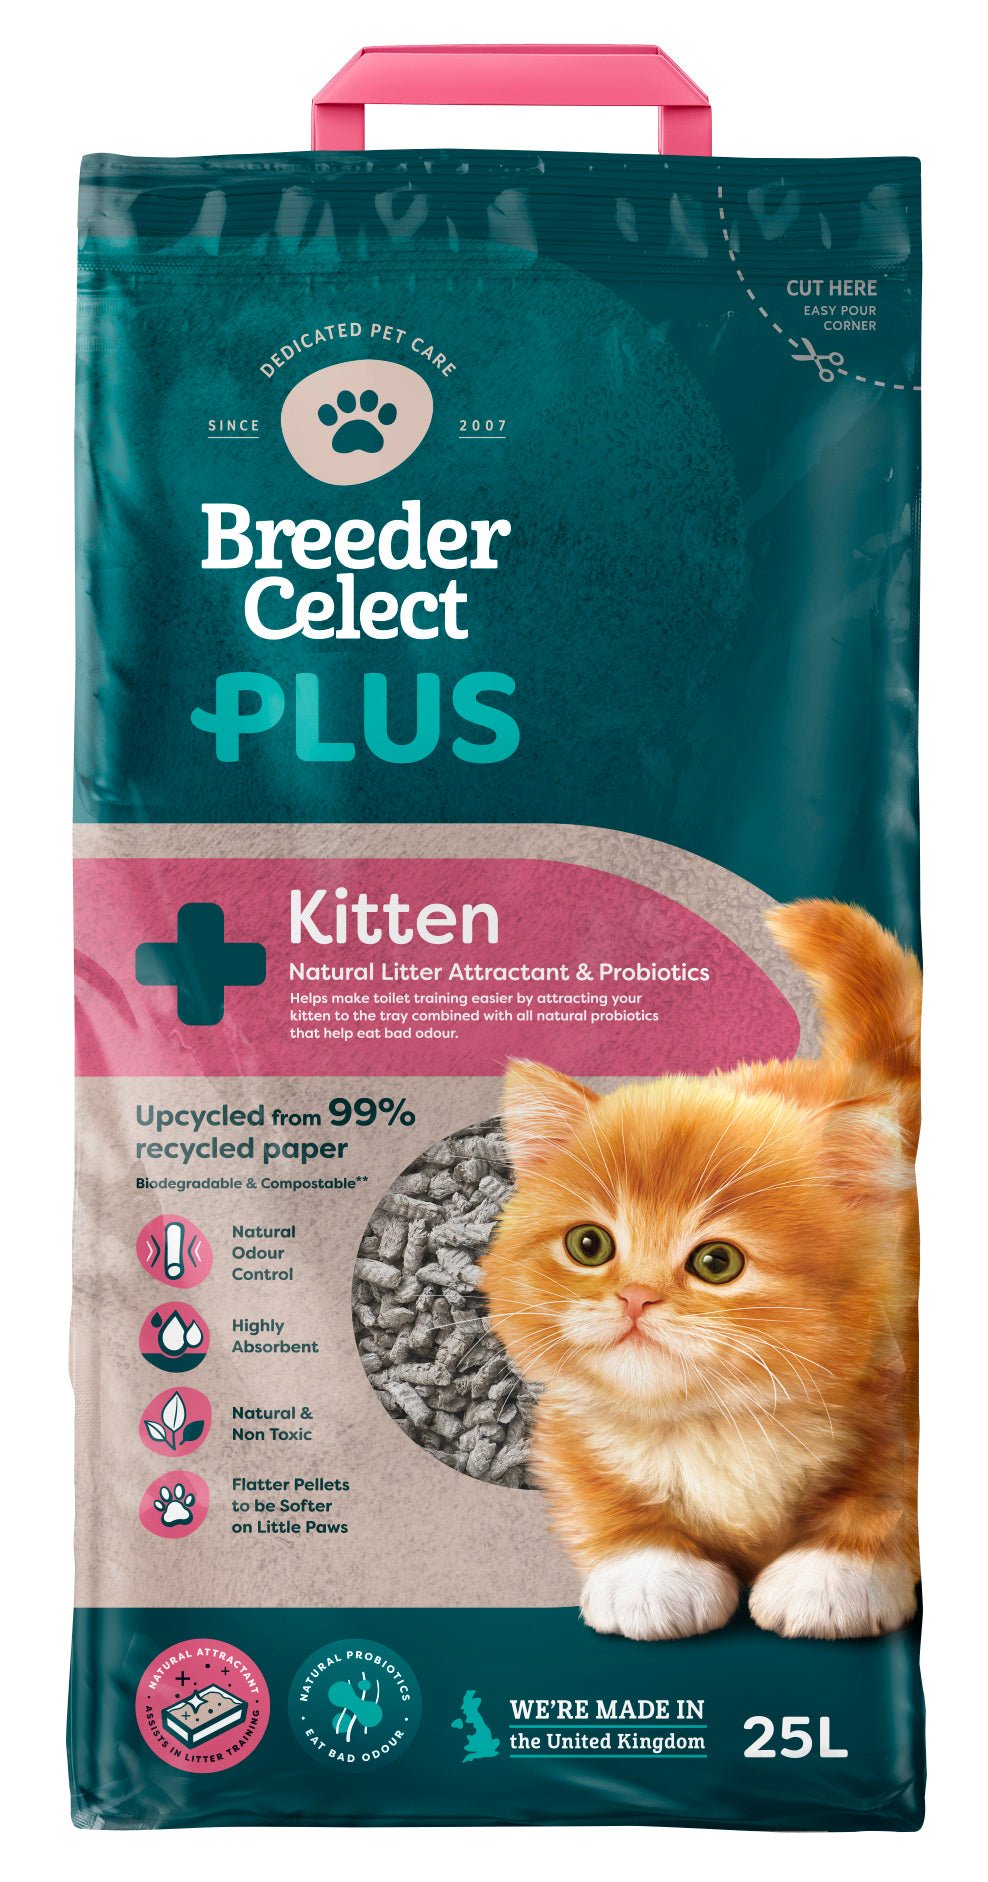 Breeder Celect Plus Kitten Litter 25 L, FibreCycle,